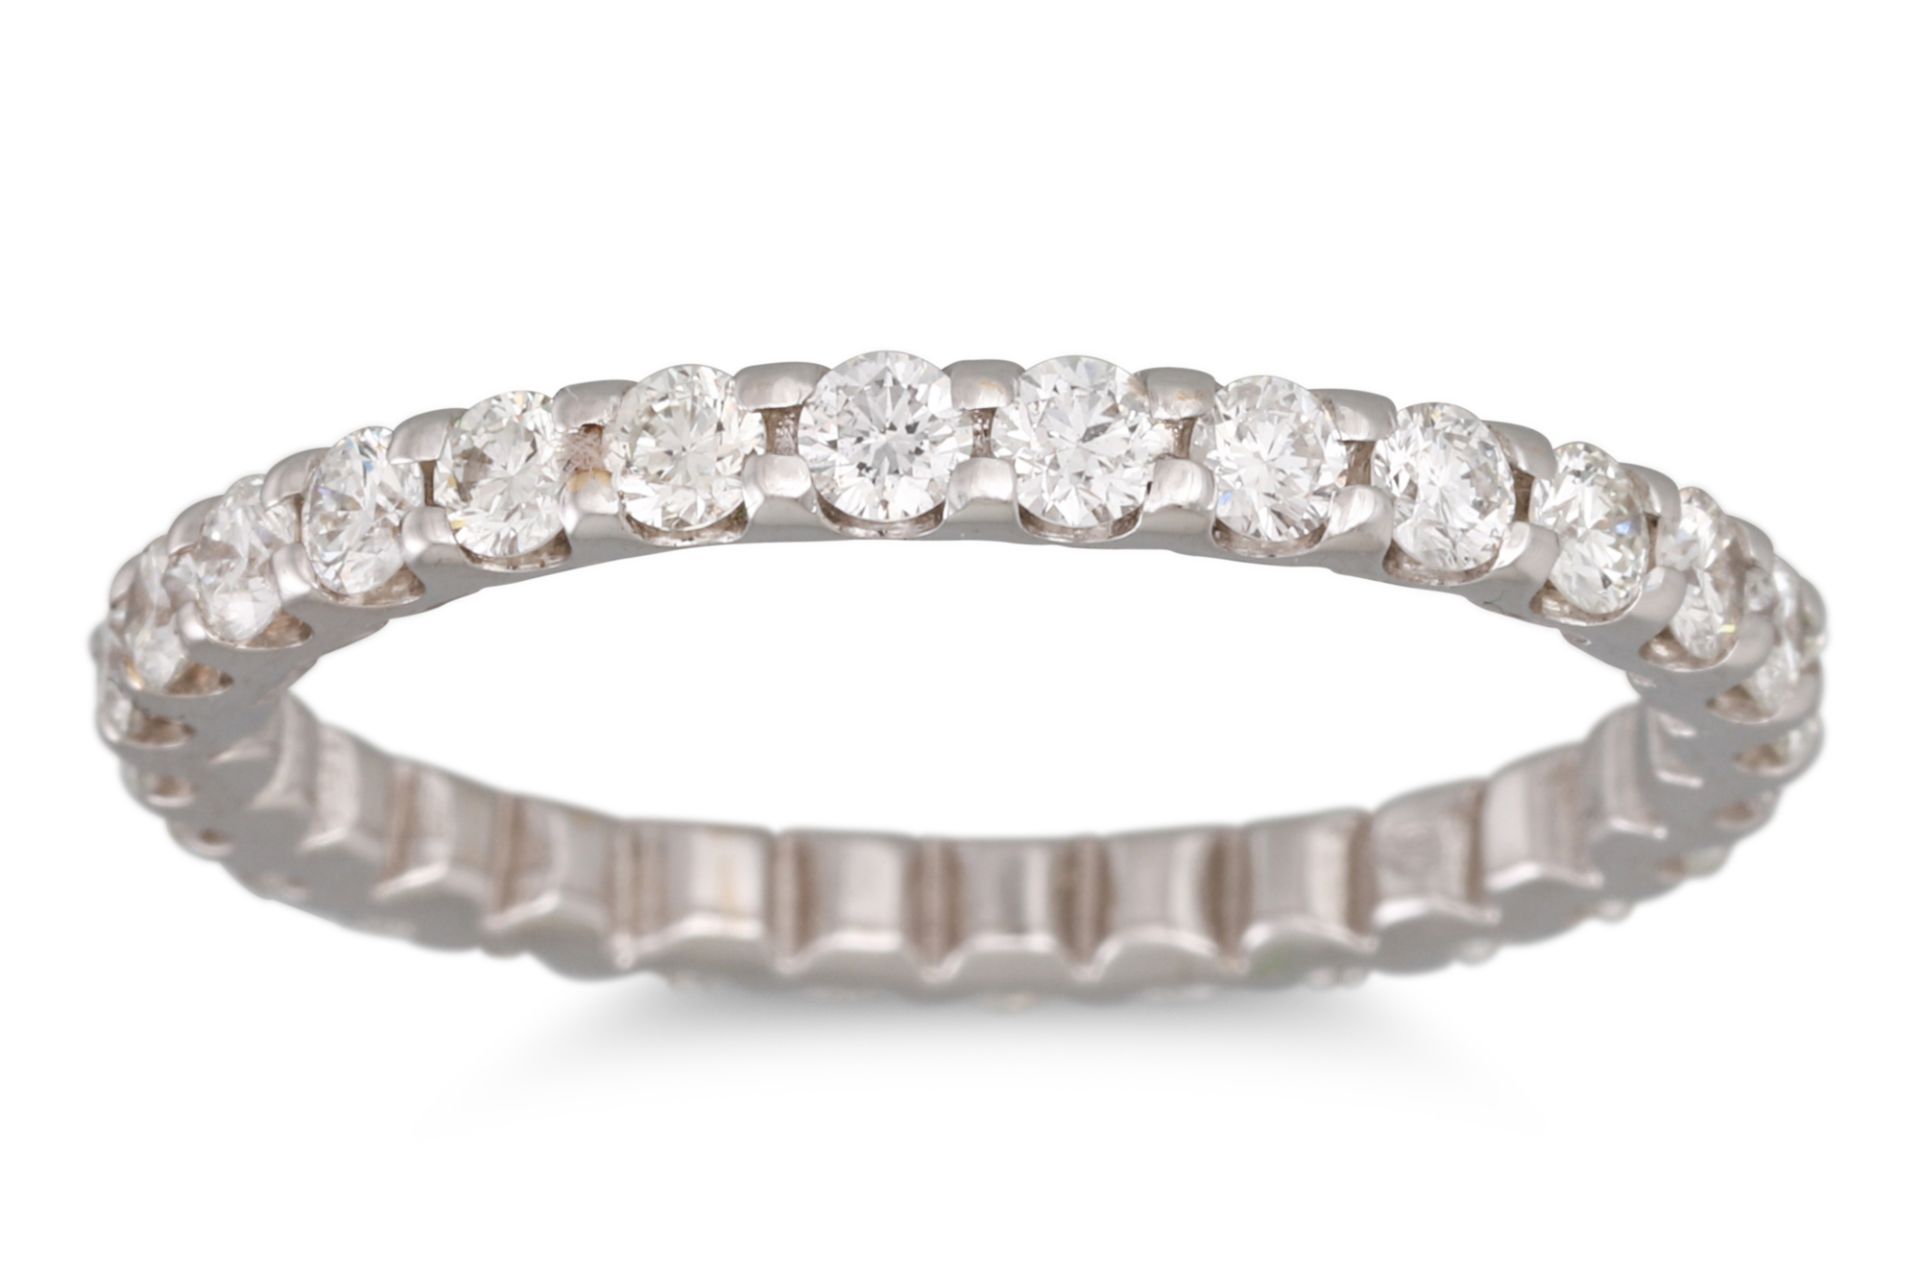 A DIAMOND FULL ETERNITY RING, the brilliant cut diamonds mounted in 18ct white gold. Estimated: